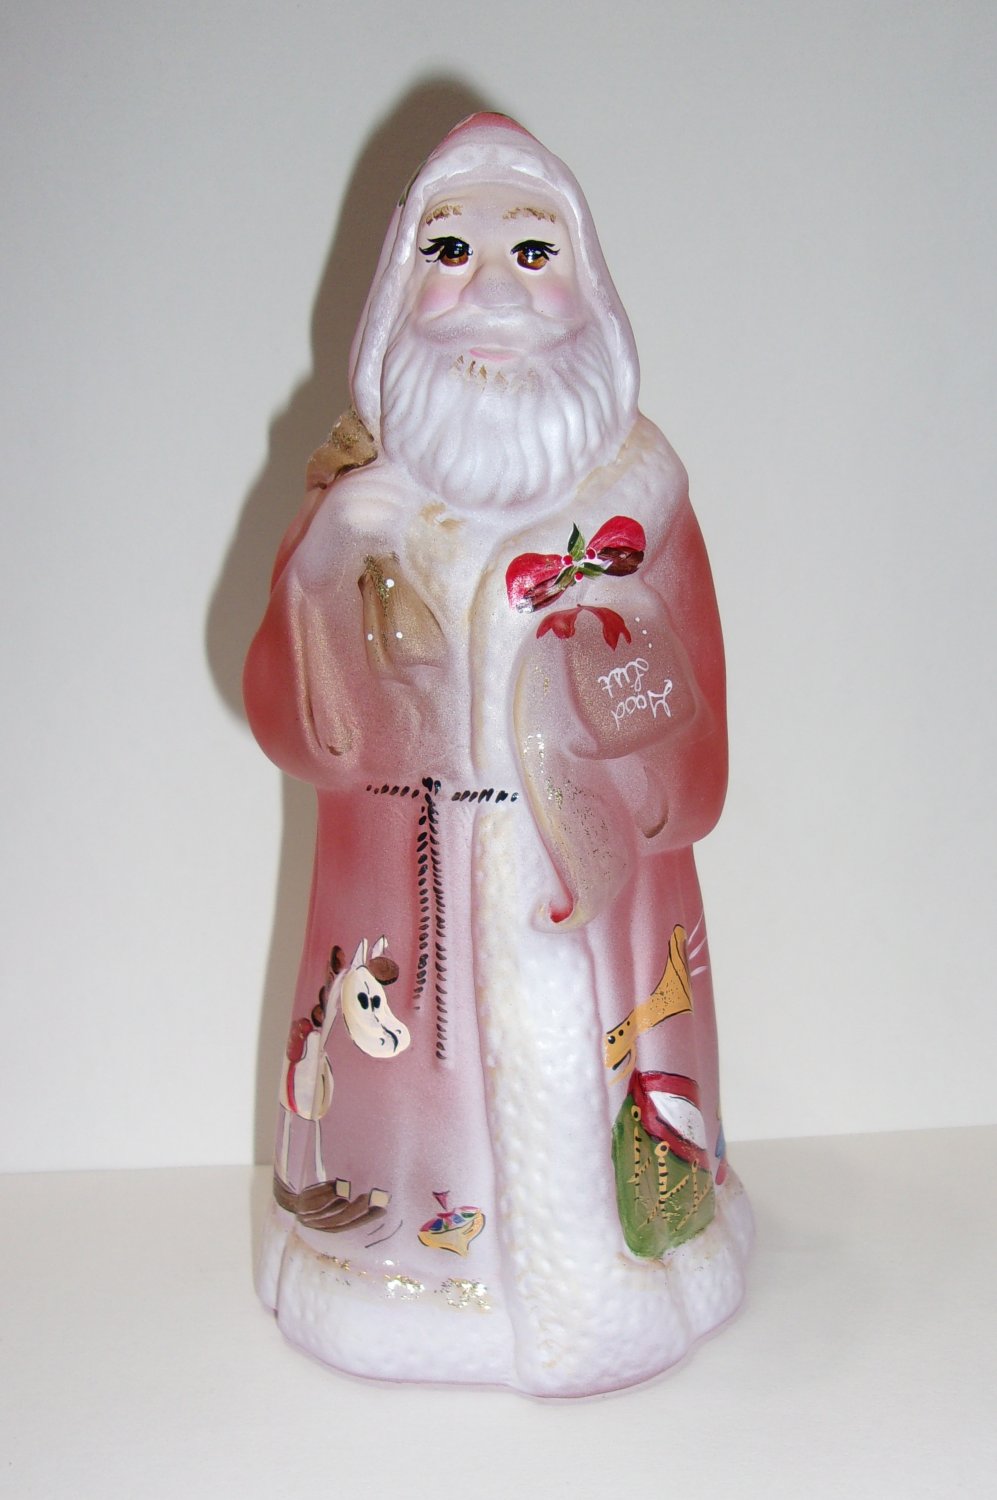 Fenton Glass Rose Vintage Toys Christmas Santa Claus Figurine Ltd Ed #2/32 Kibbe